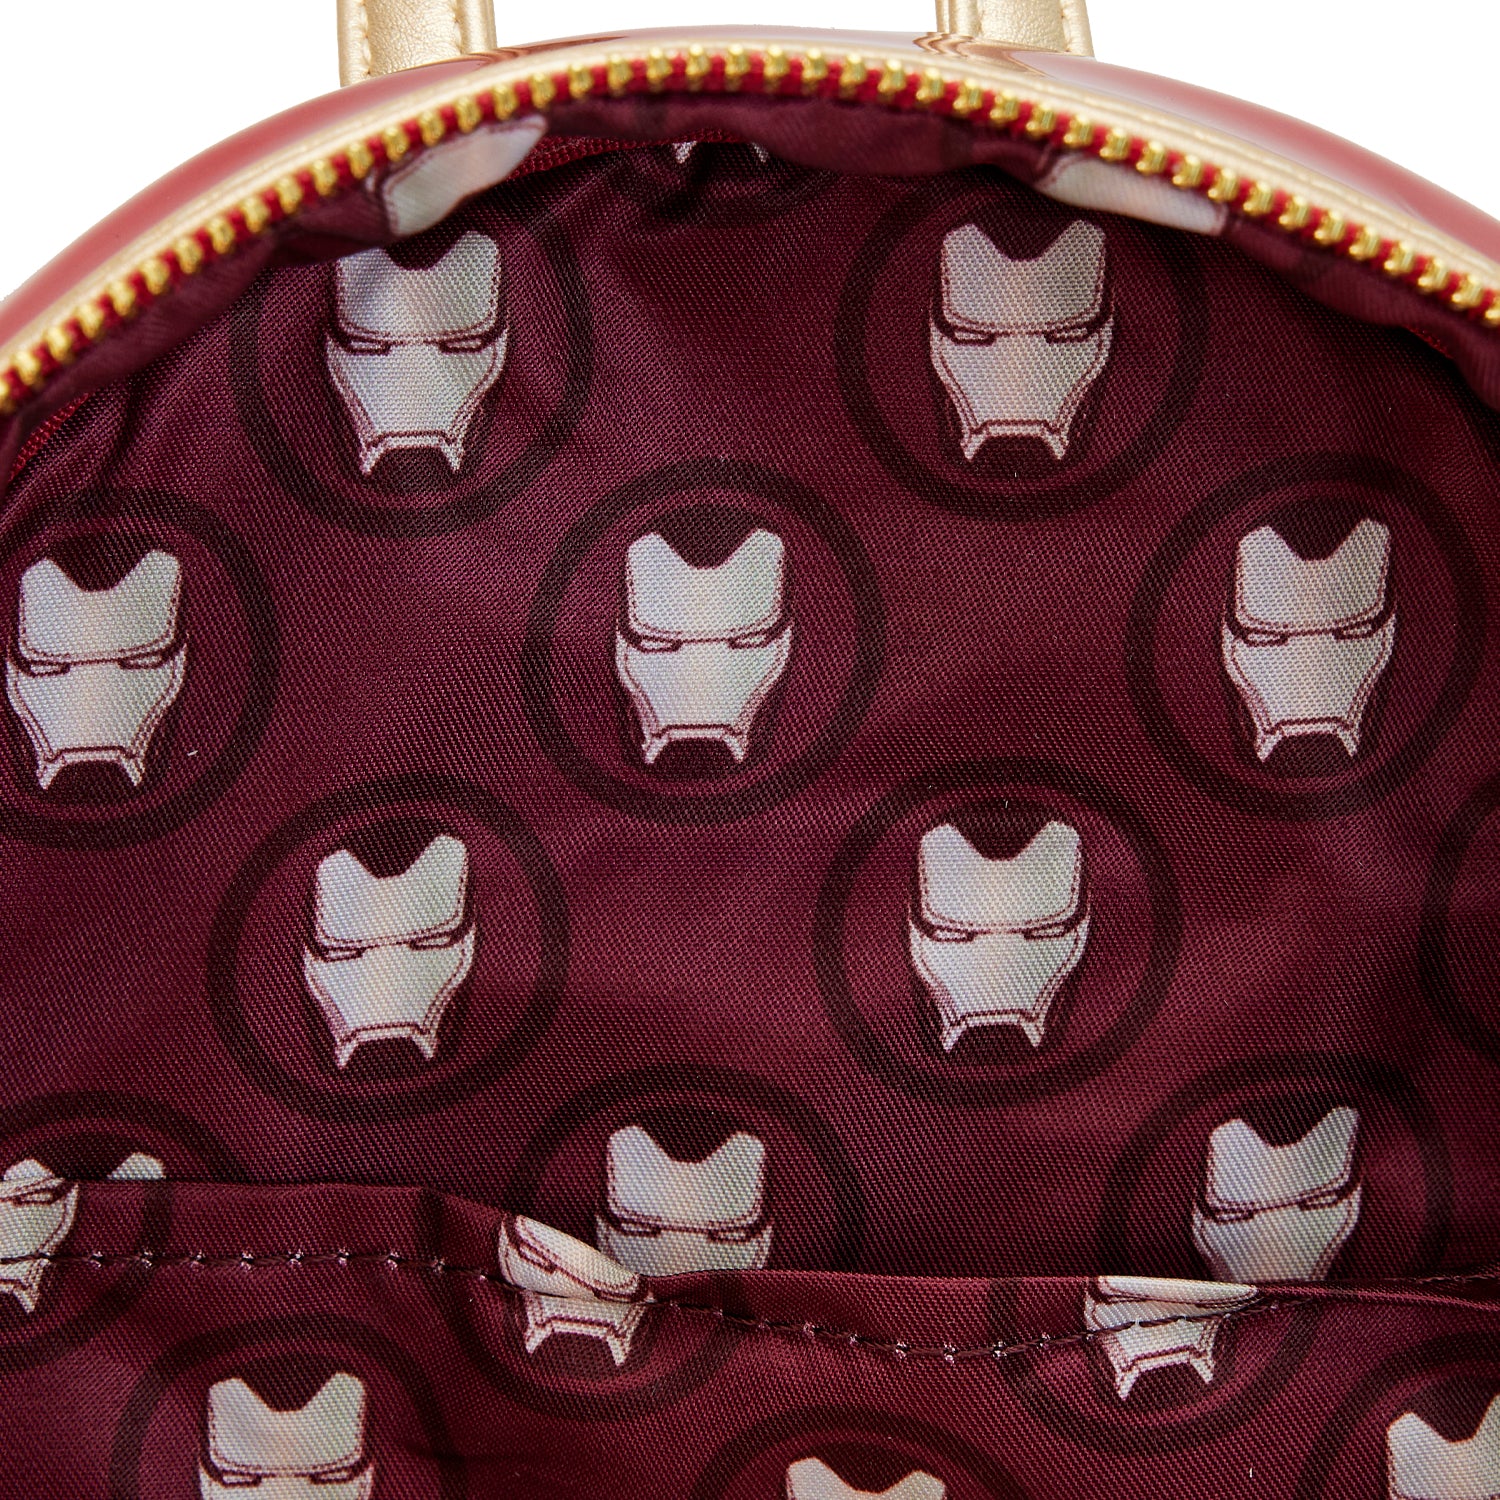 Marvel | Iron Man 15th Anniversary Cosplay Mini Backpack